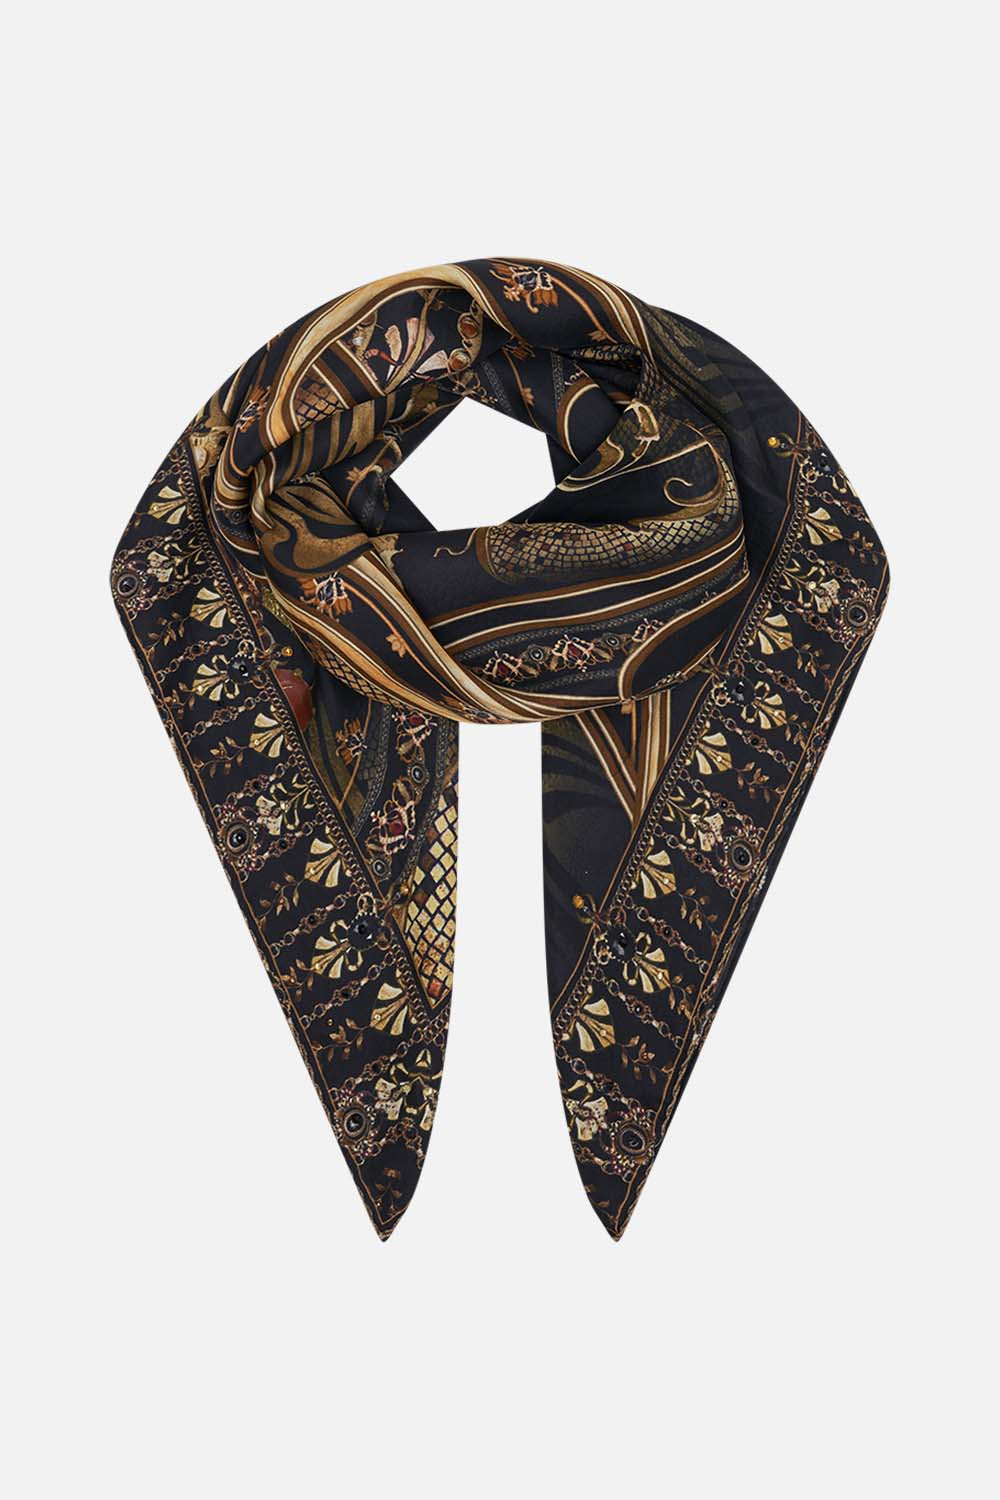 CAMILLA silk scarf in Nouveau Noir print